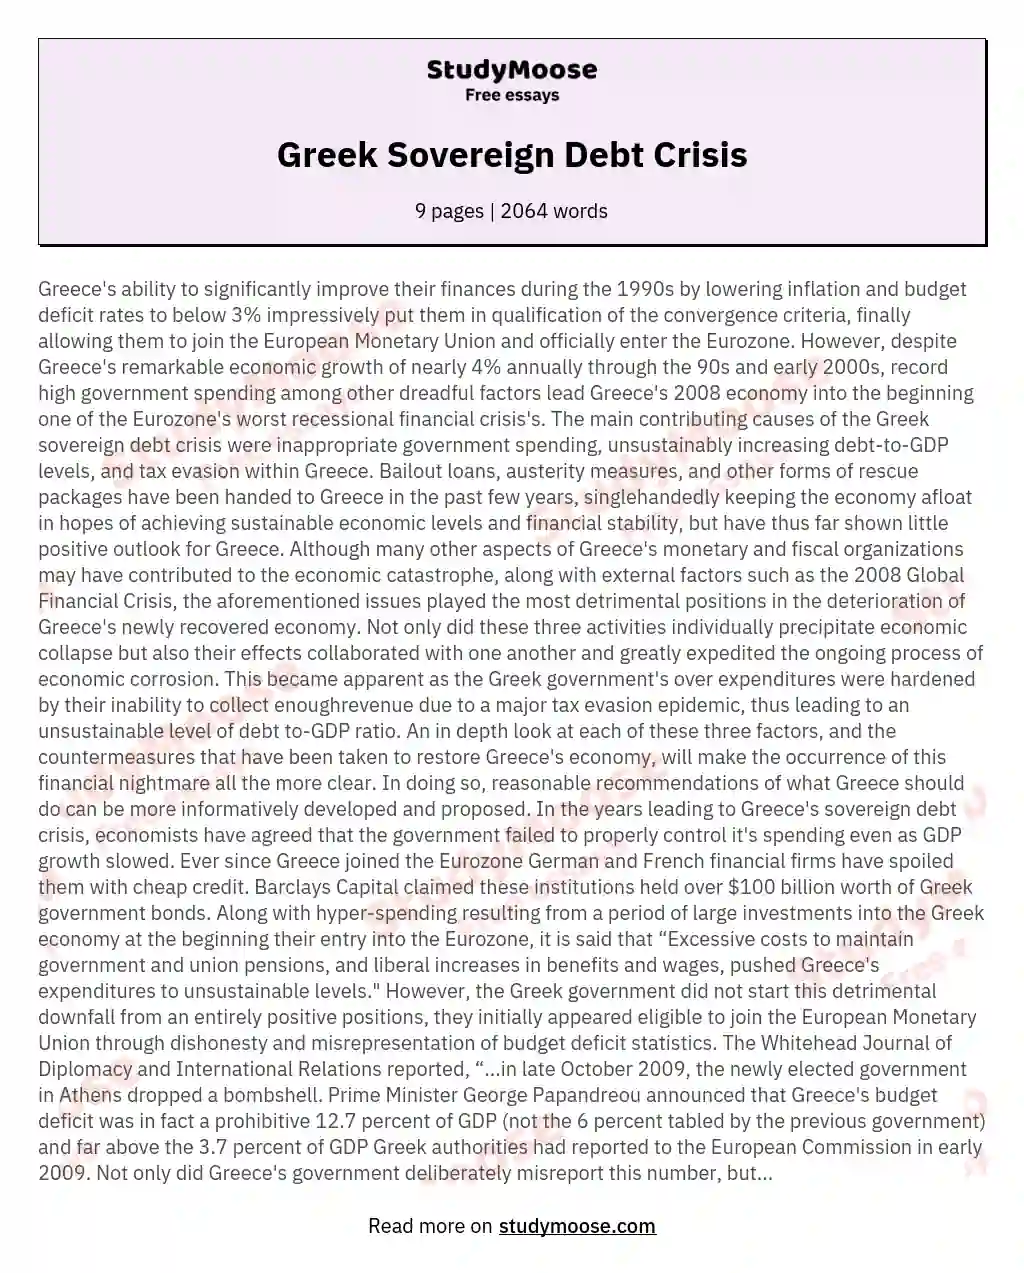 Greek Sovereign Debt Crisis essay